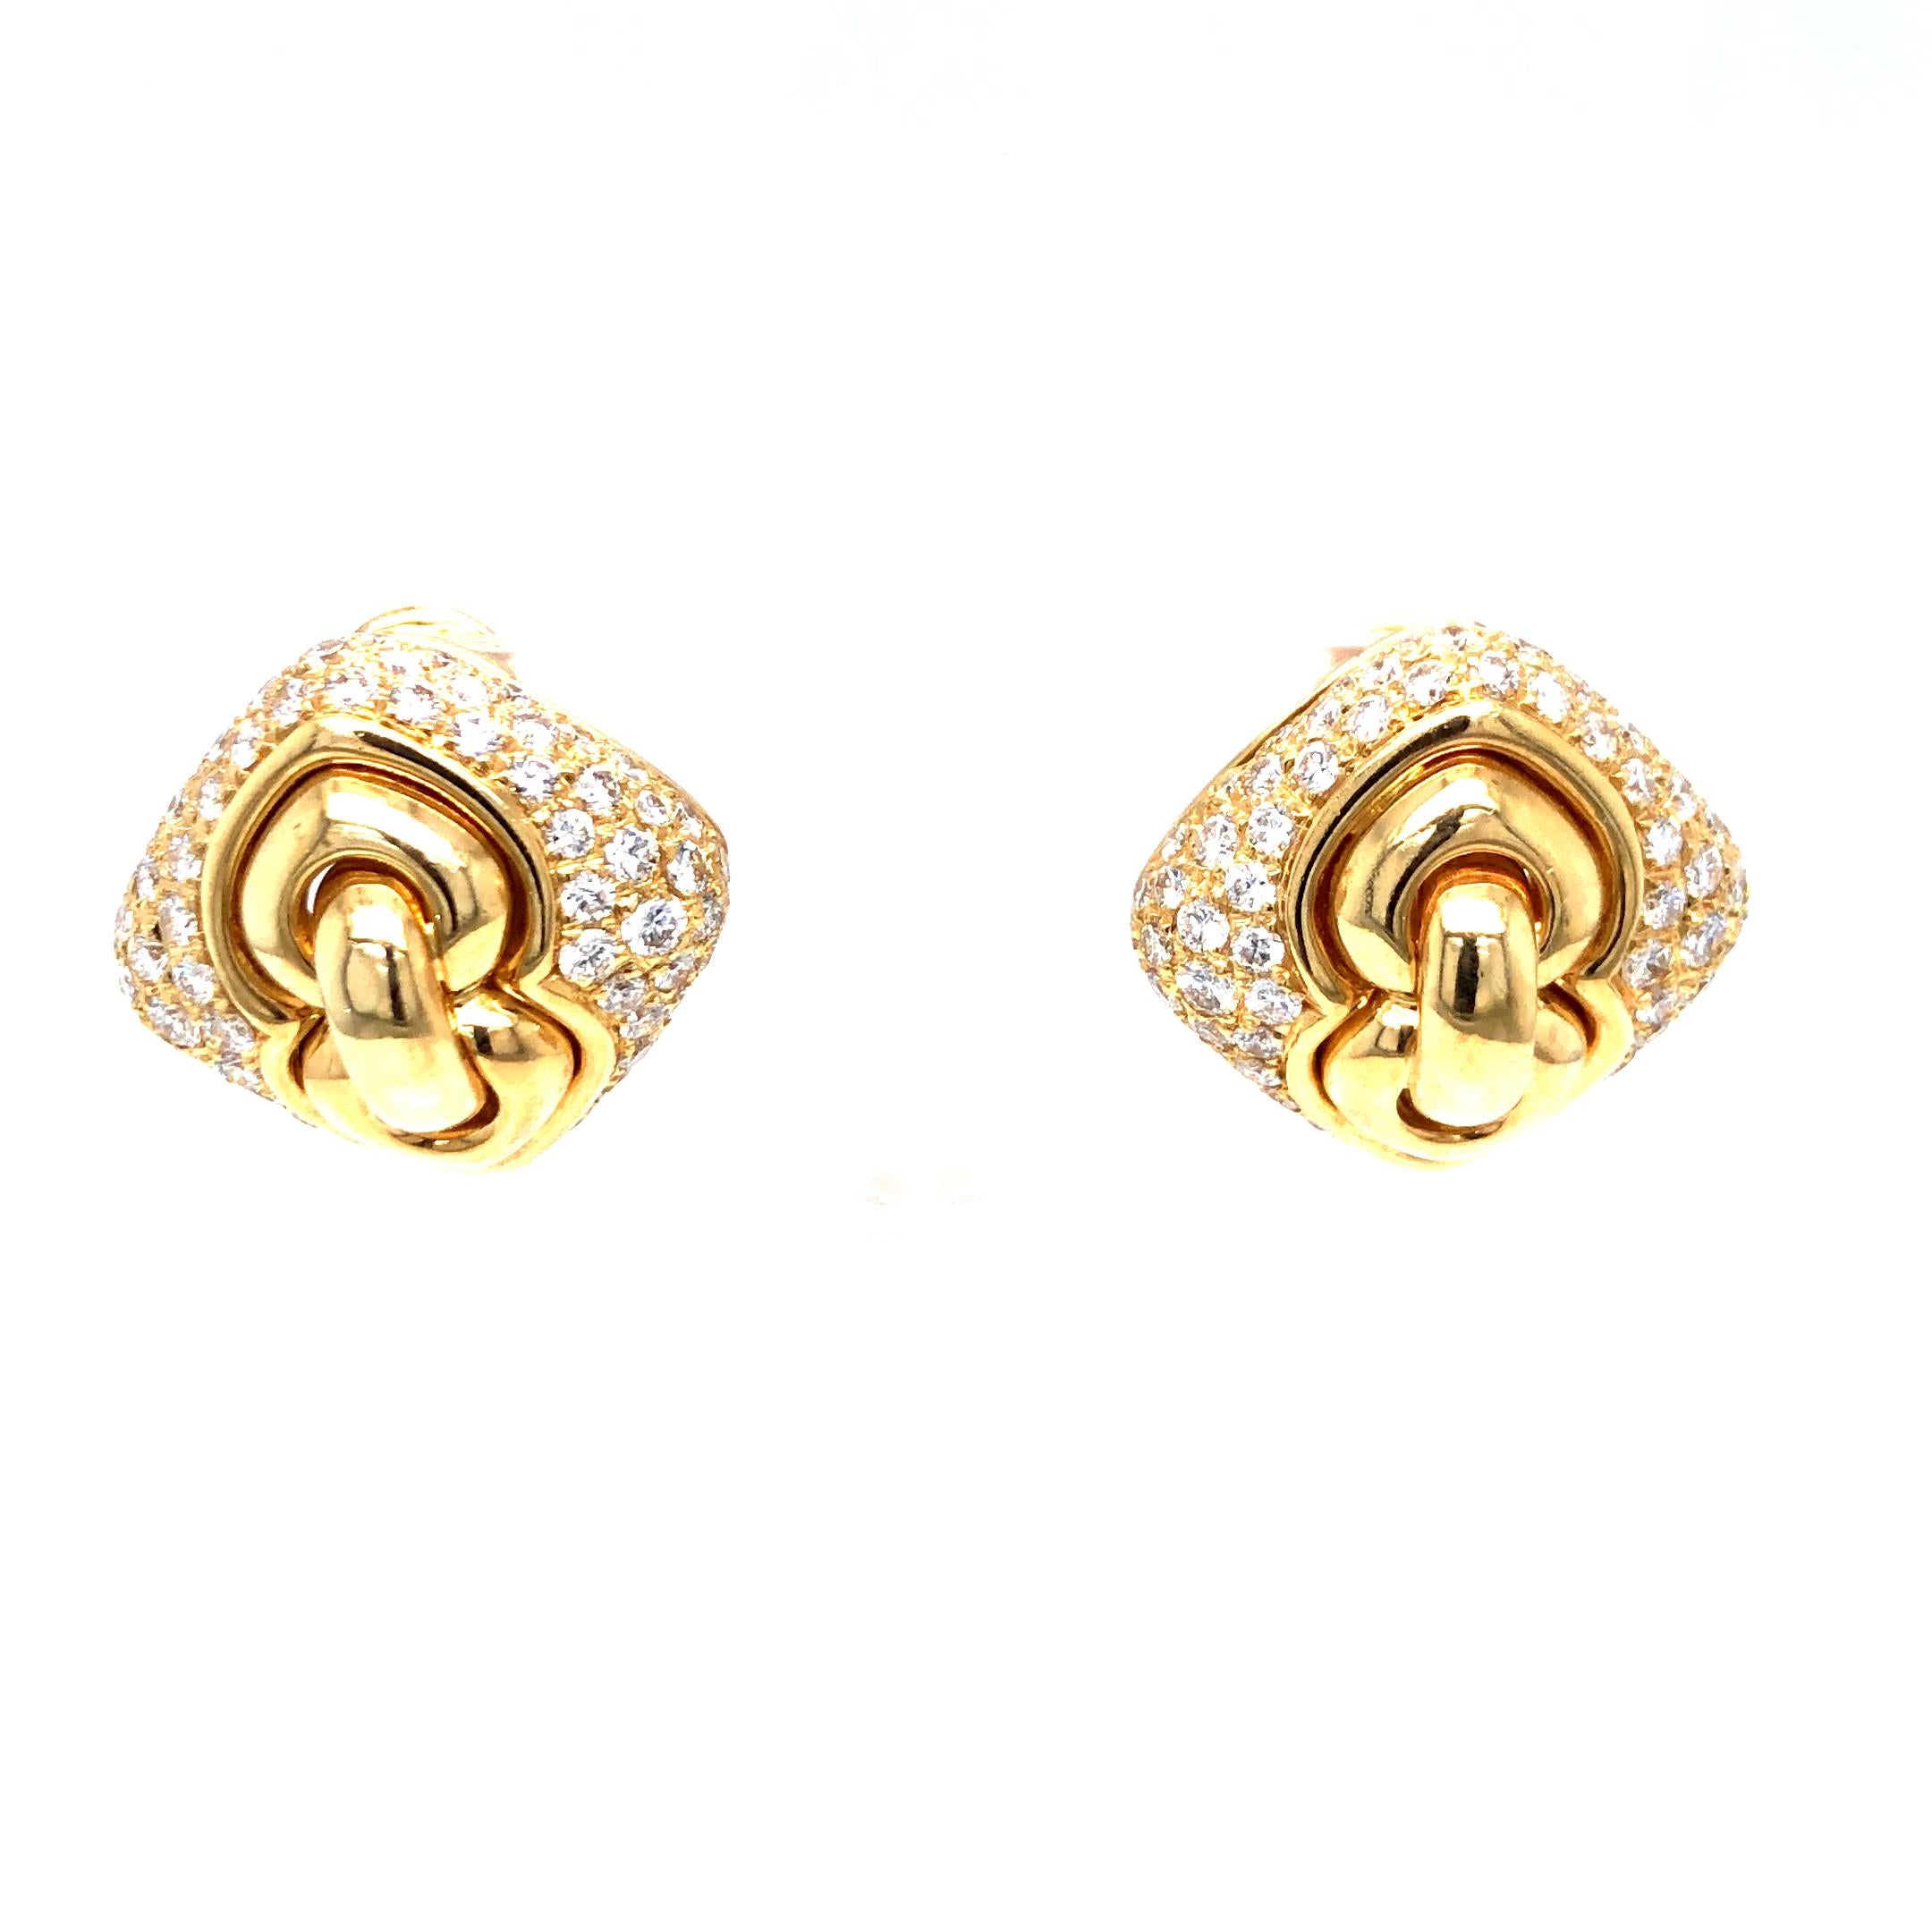 Estate Bulgari Square Pave Diamond Earrings in 18K Yellow Gold. The earrings feature 4ctw of pave set brilliant round cut diamonds. Omega backs.
0.75